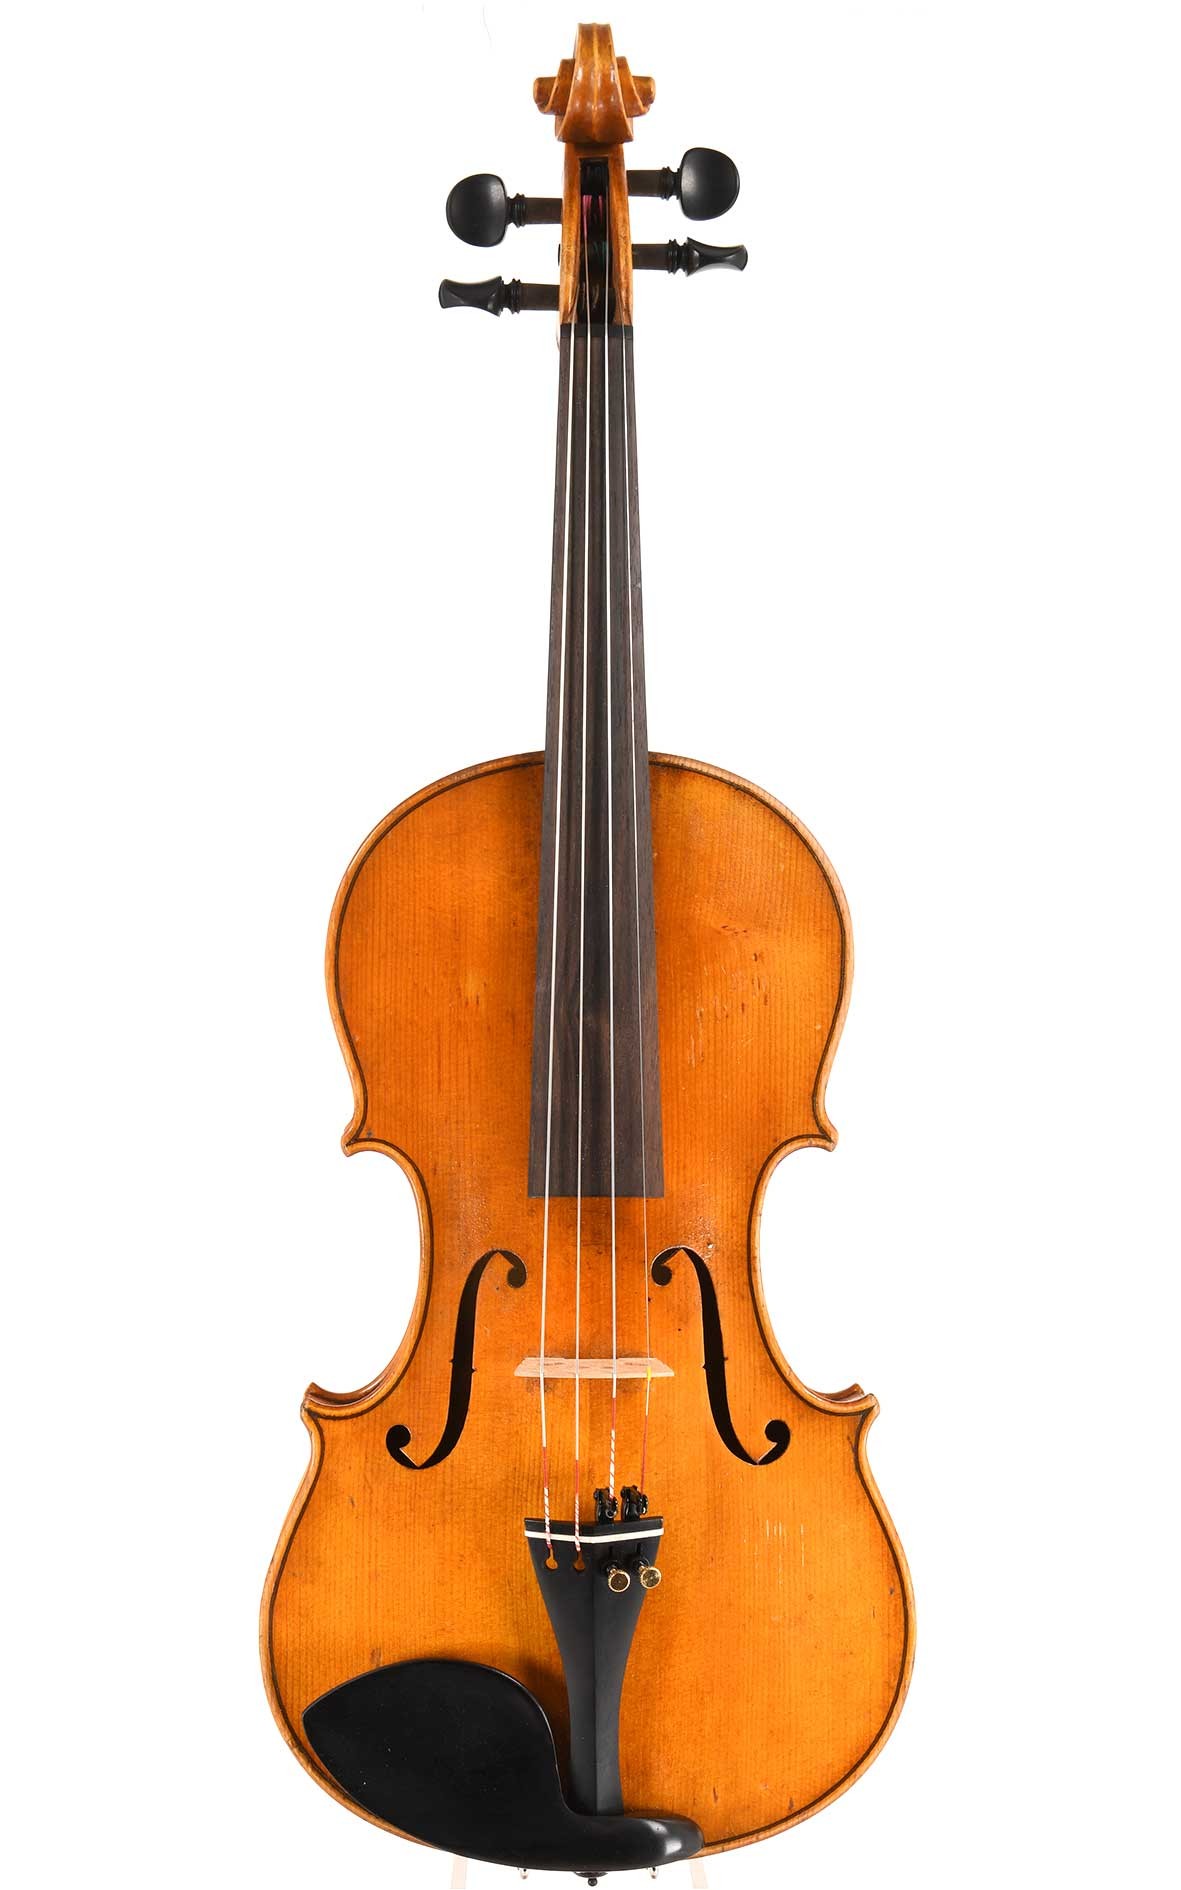 German violin, Markneukirchen, after Stradivari